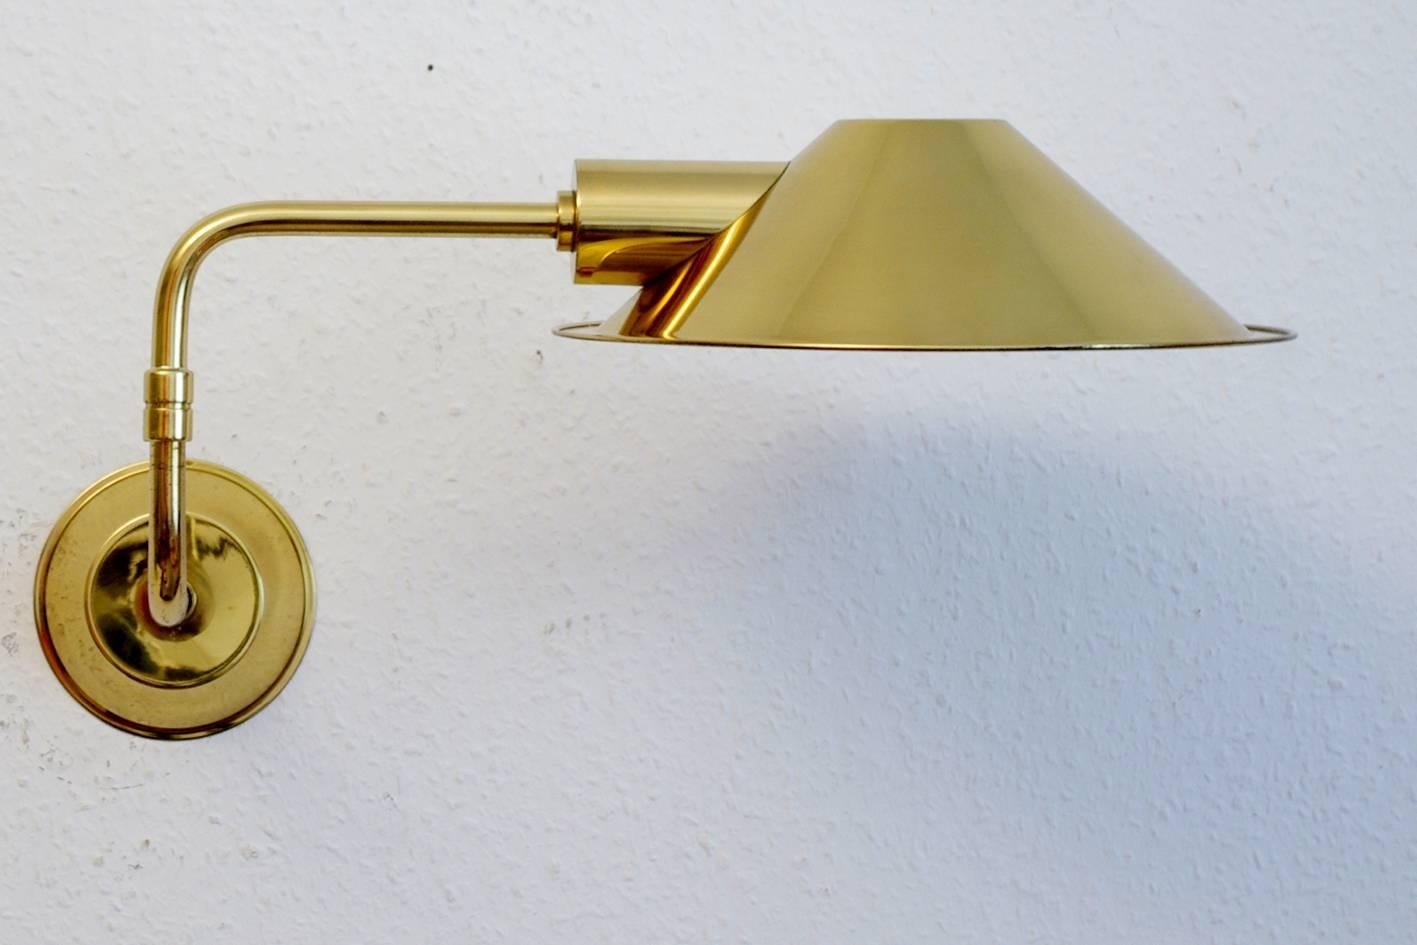 Rare Elegant German Solid Brass Swing Arm Wall Light Sconce, 1960s (20. Jahrhundert)